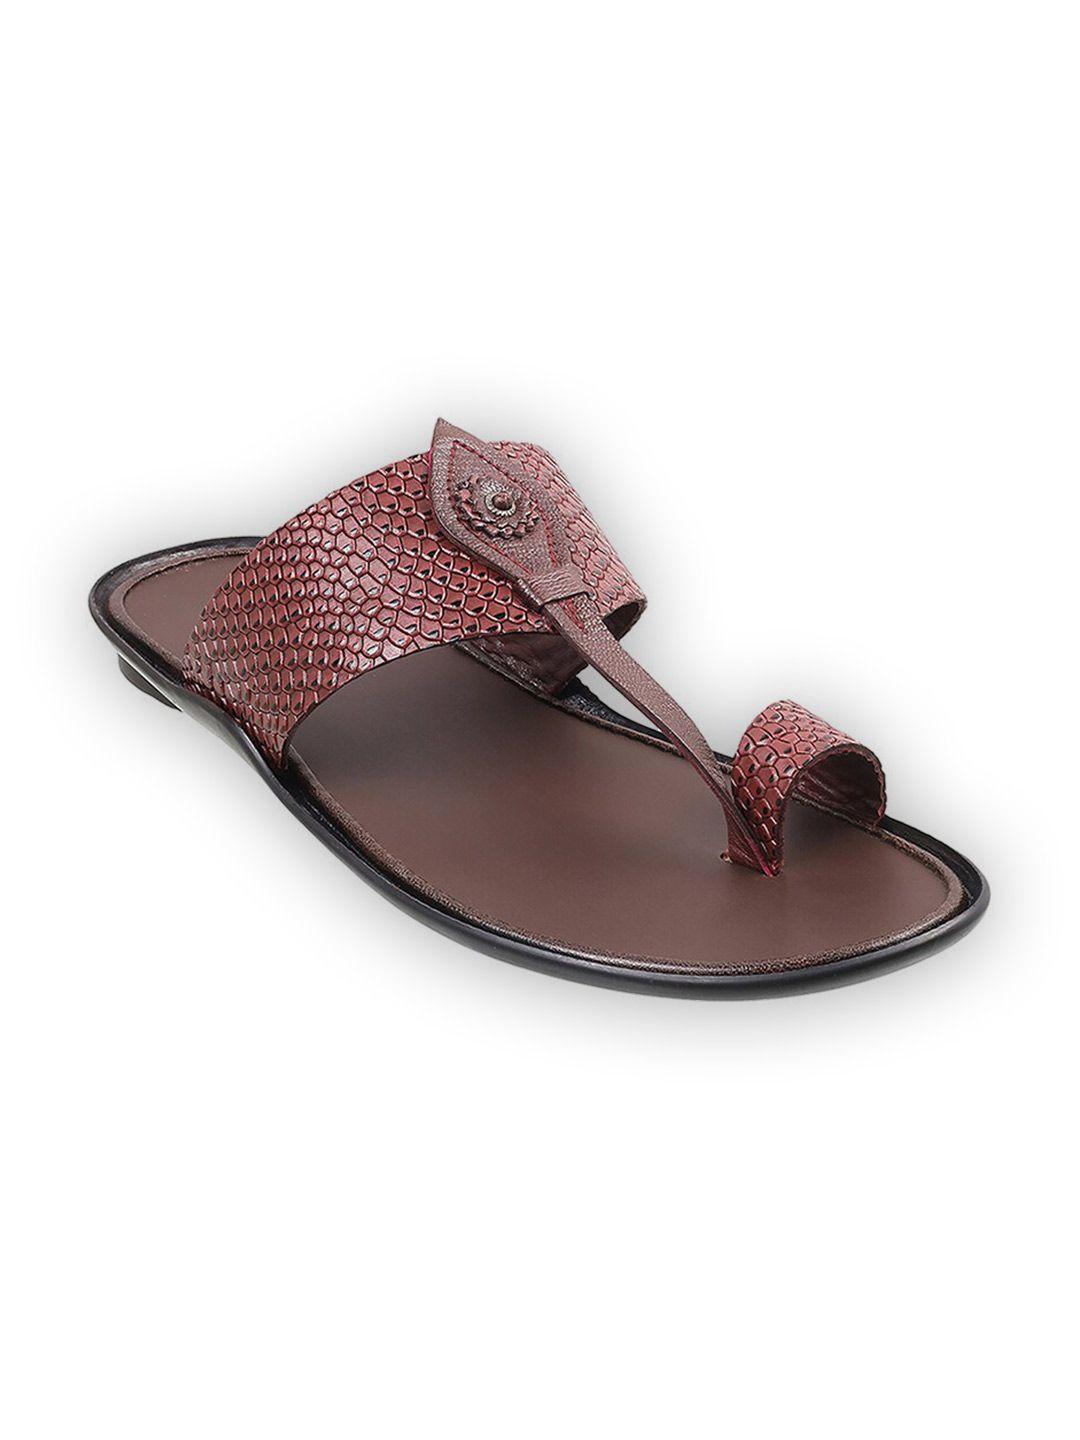 mochi men textured leather comfort sandals